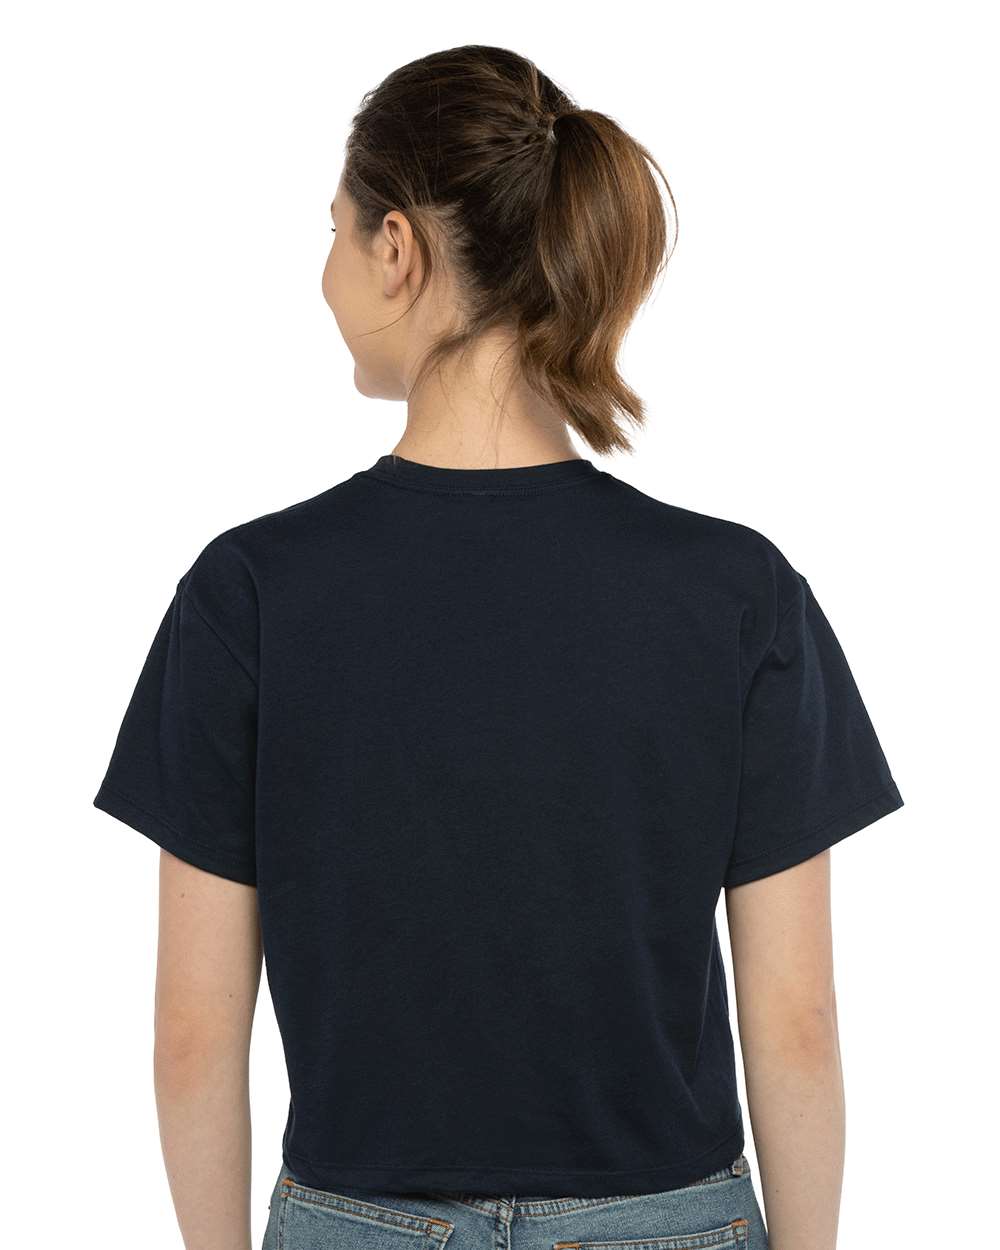 Next Level - Women's Ideal Crop Top - 1580 – Shirts23 - Premium Blank Shirts  & More!